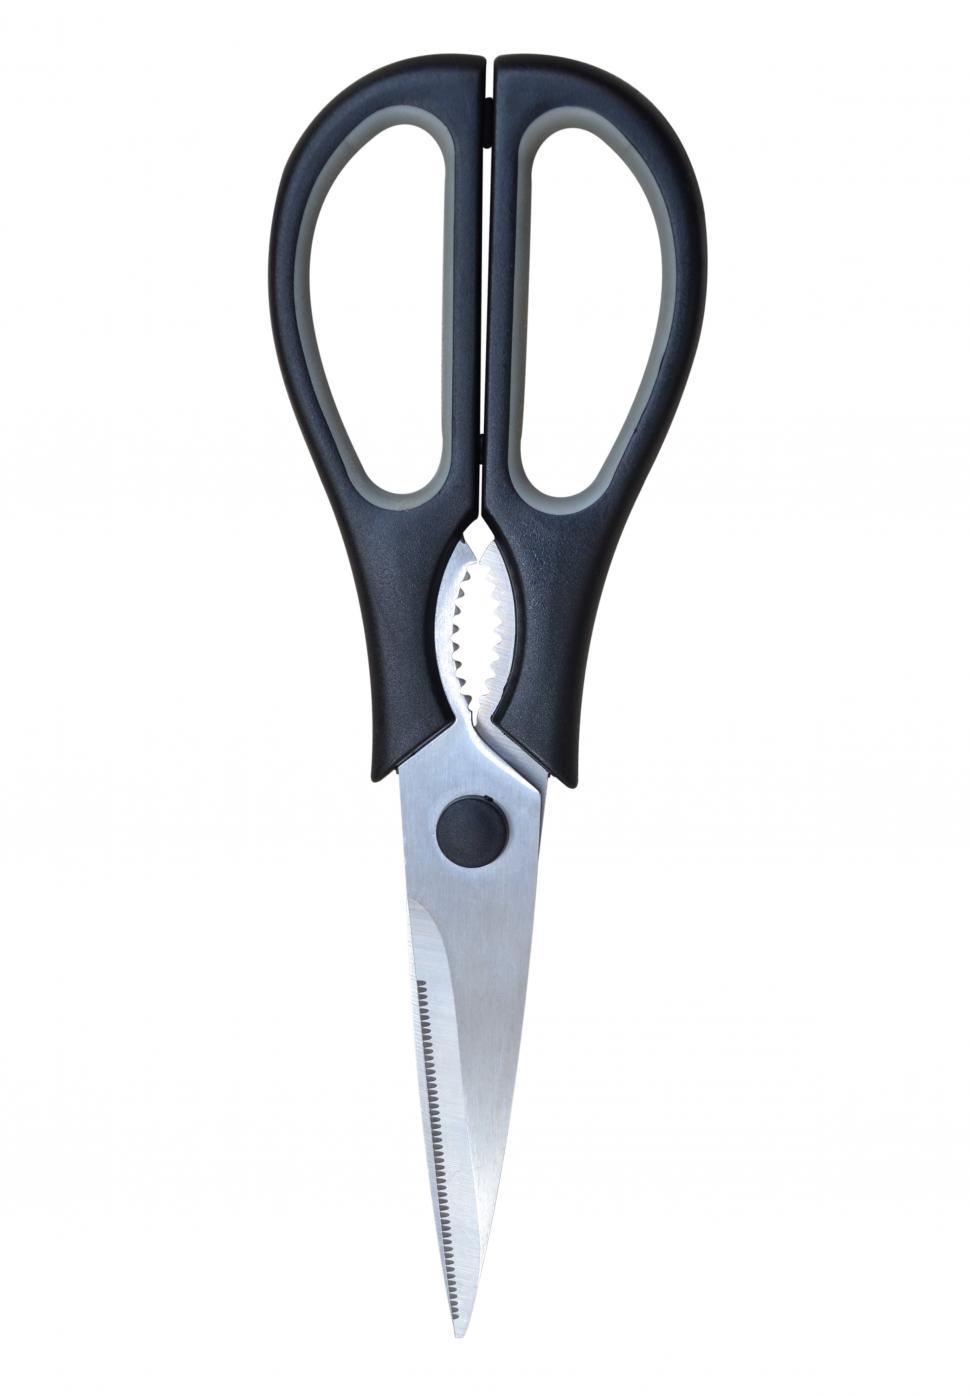 Free Image of Black kitchen scissors  